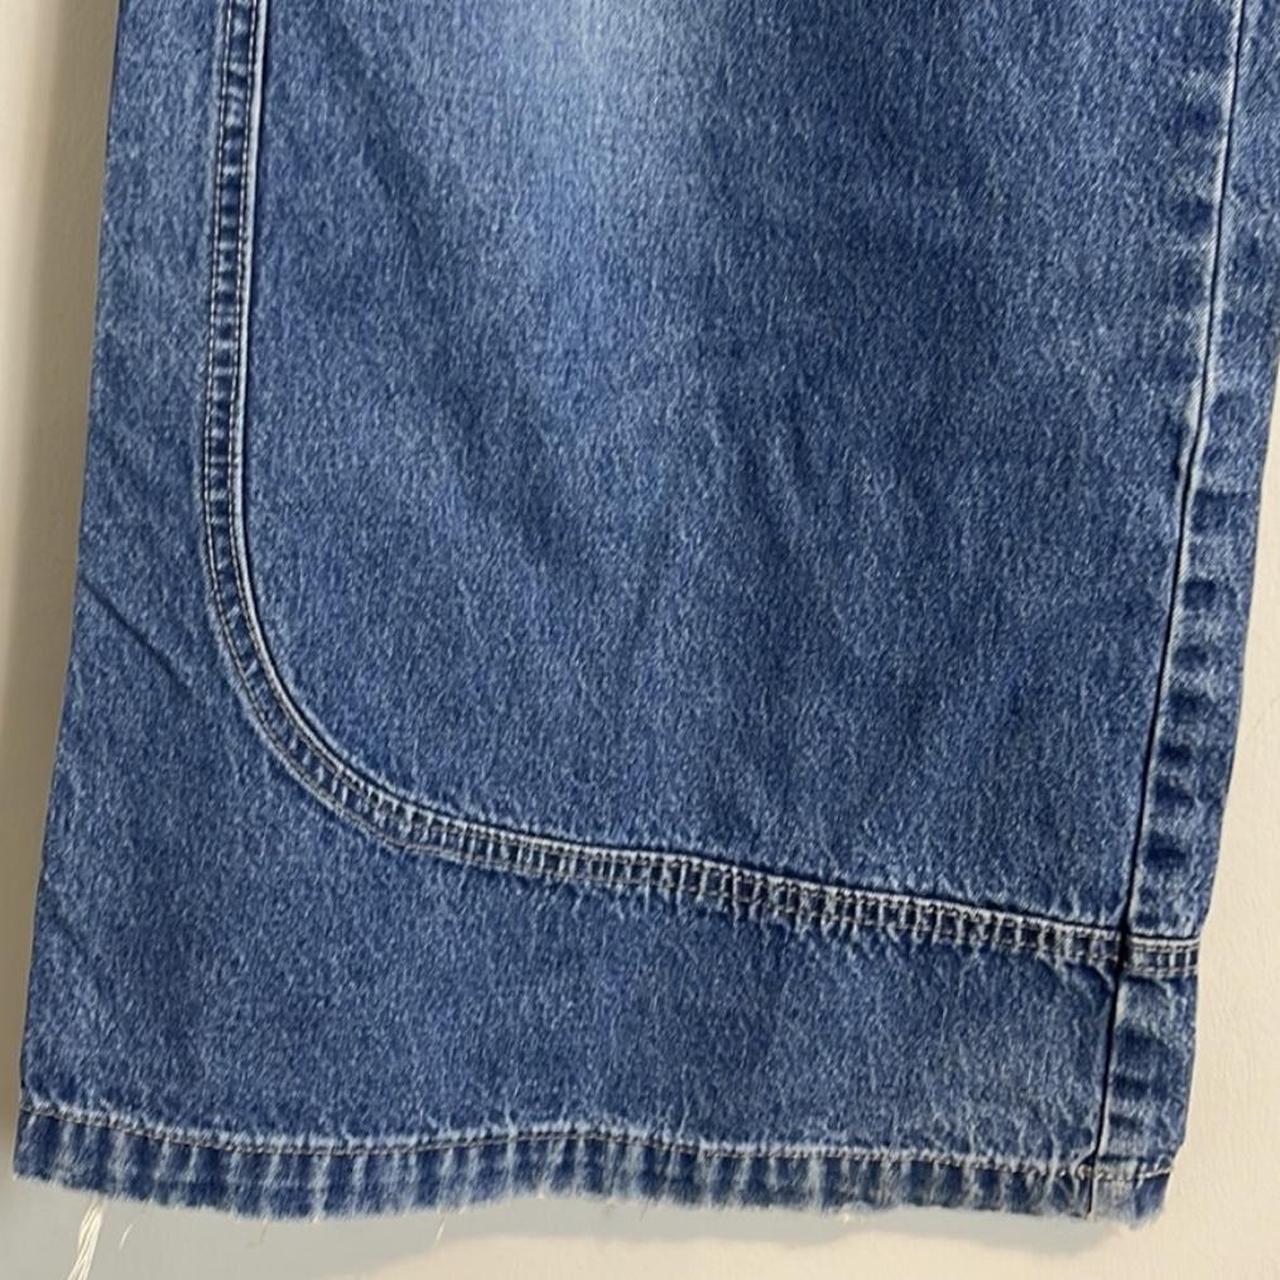 90’s KIKGIRL pants! PRICE IS FIRM - Vintage Kikgirl... - Depop